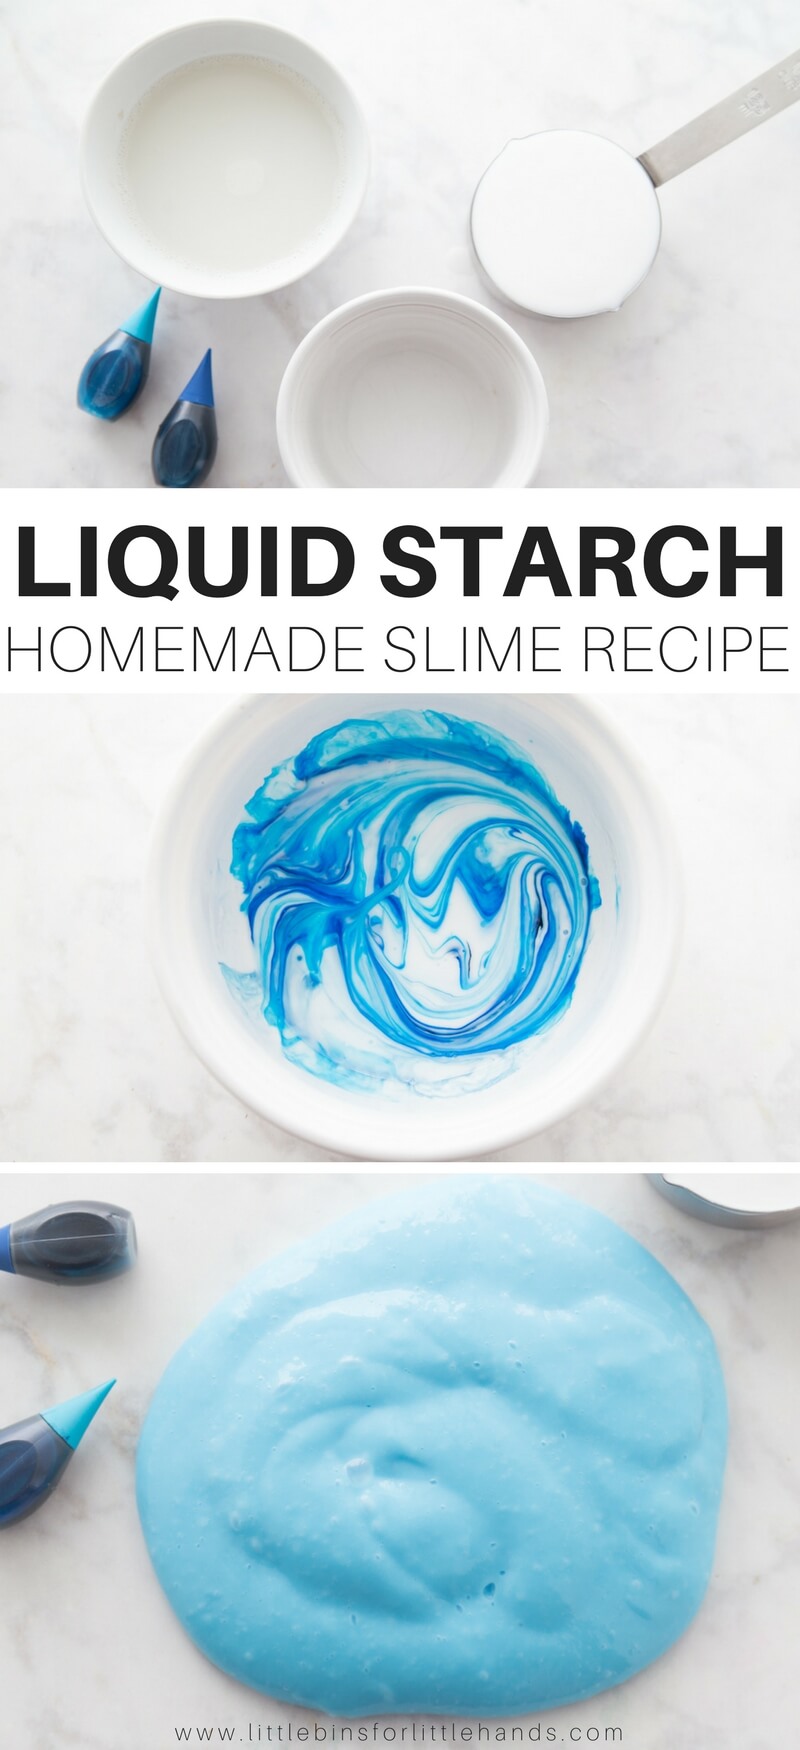 LIQUID-STARCH-homemade-slime-recipe-2.jp